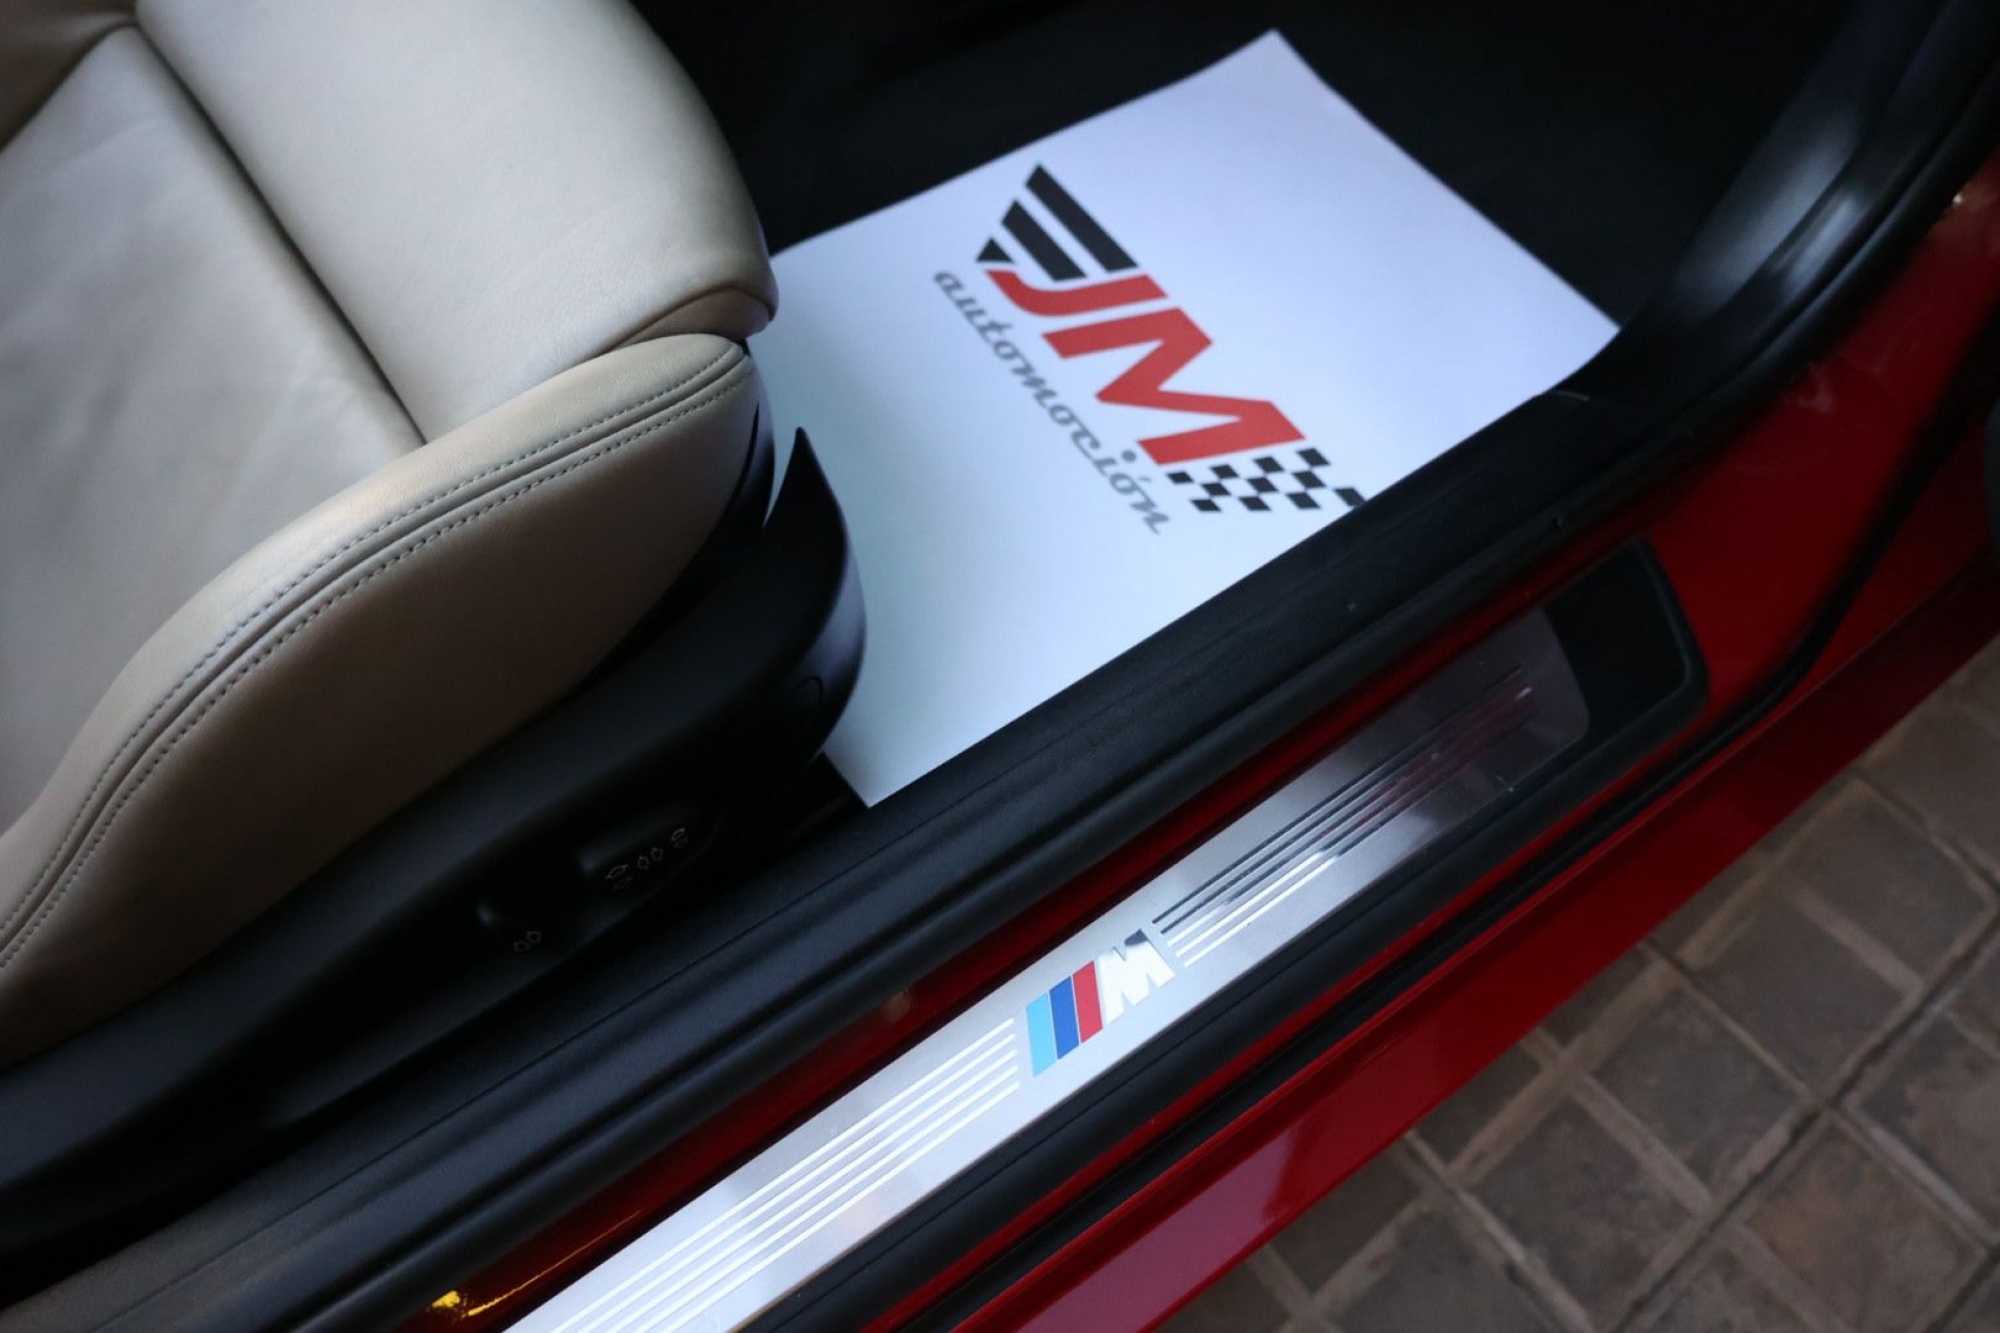 BMW Z4 M ROADSTER -NACIONAL, IMPECABLE ESTADO-